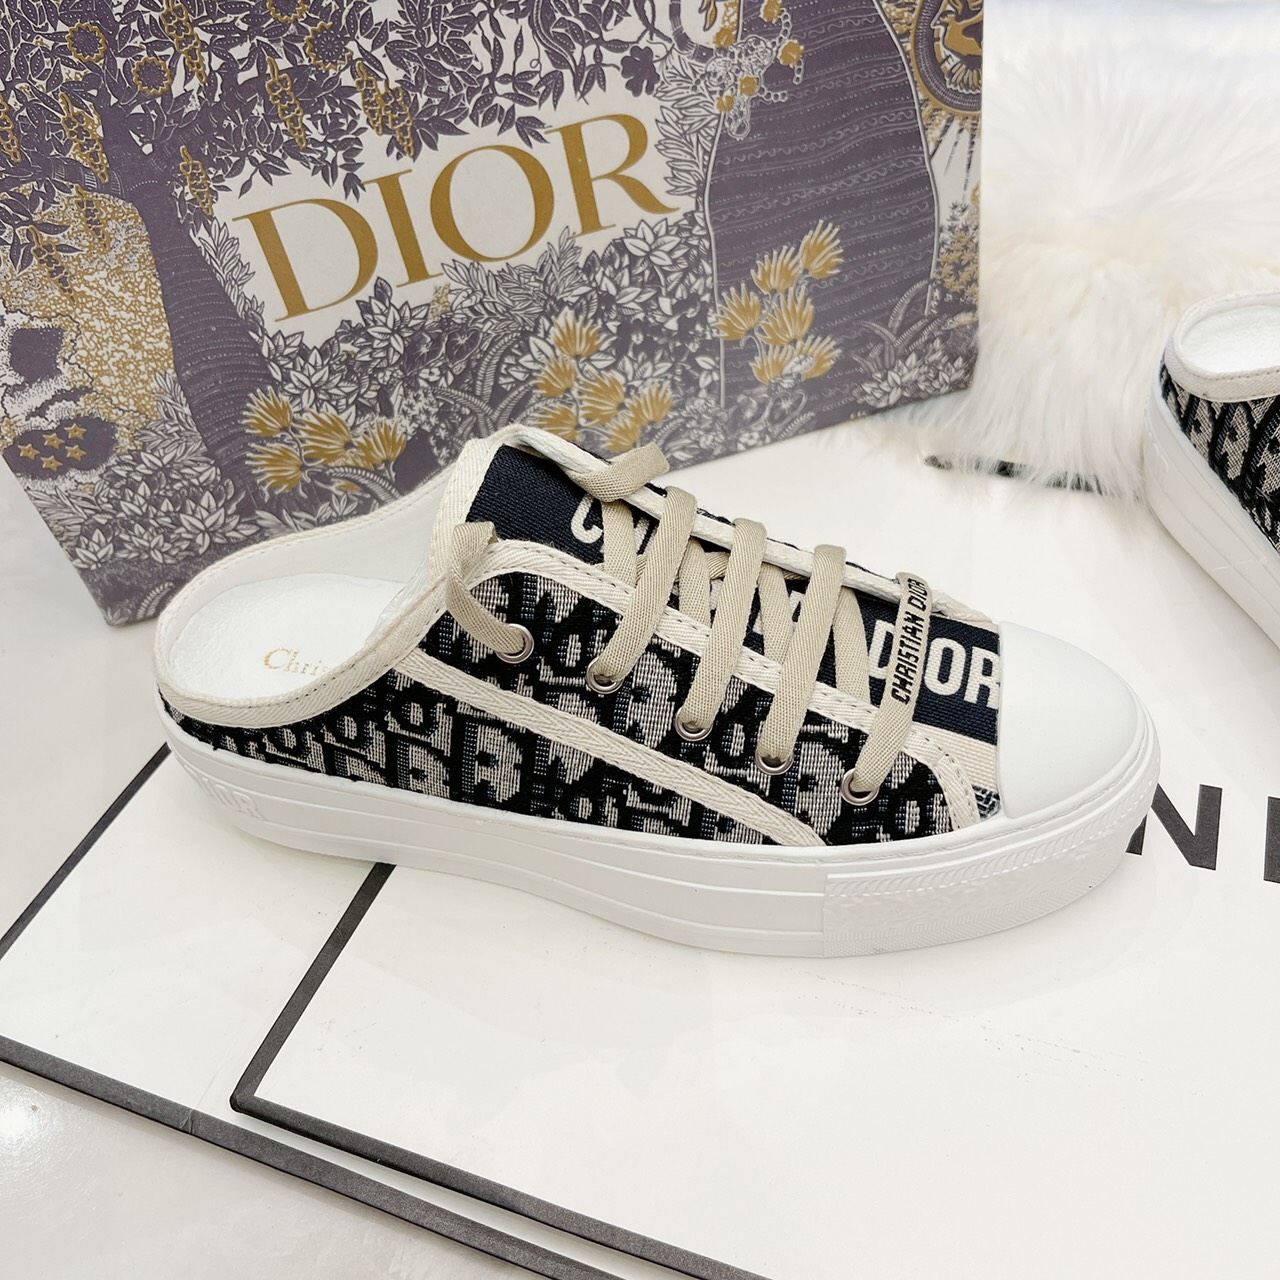 Sục nam Dior hoạ tiết oblique đẹp 3844 1600k httpLienFashionvn  lien  fashion